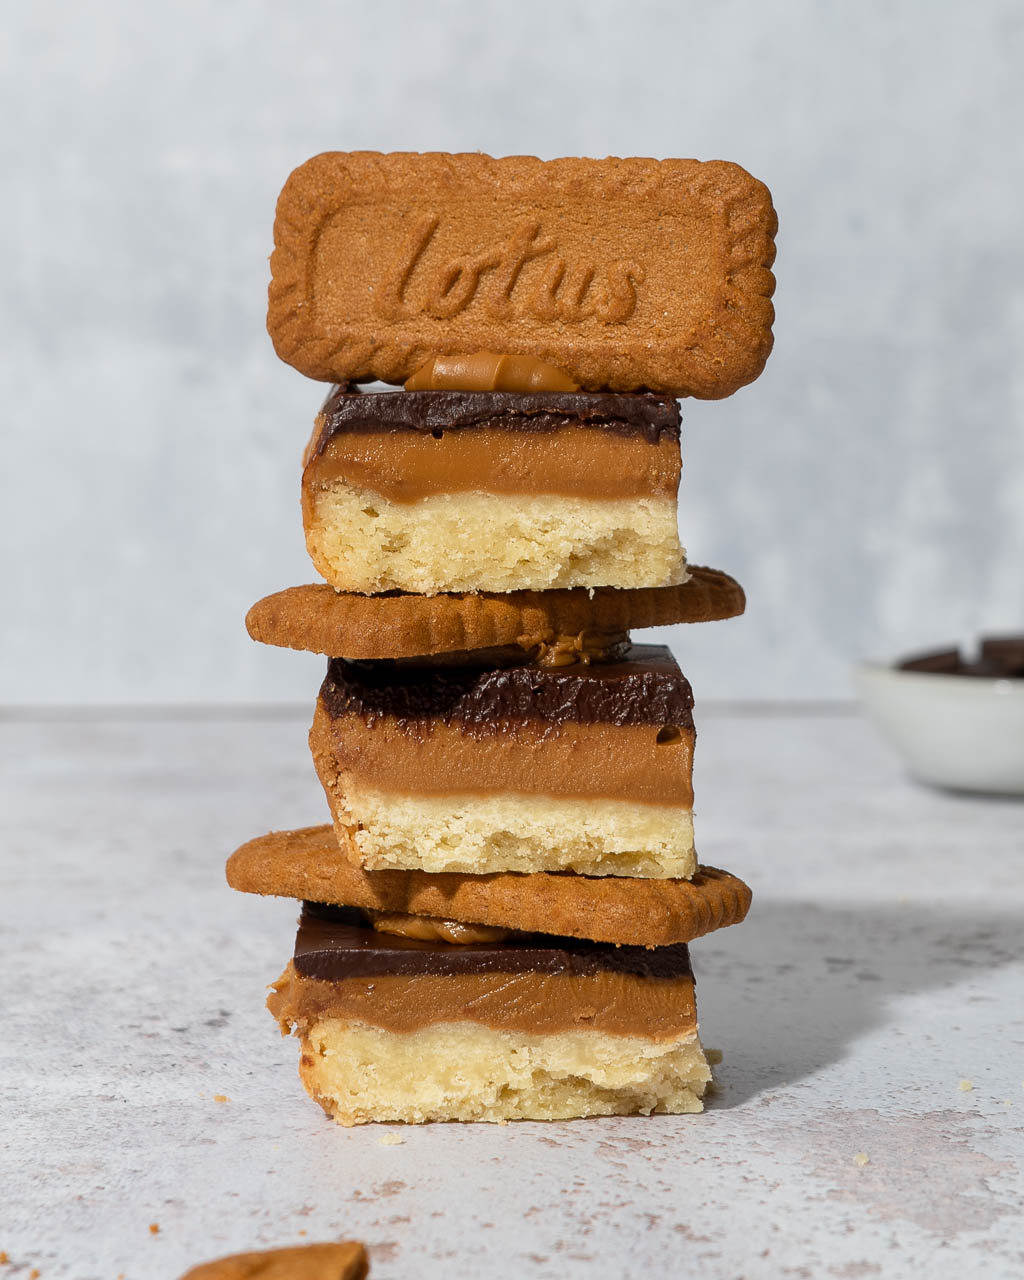 Lotus Biscoff Original Caramelised Biscuits Review - Mishry